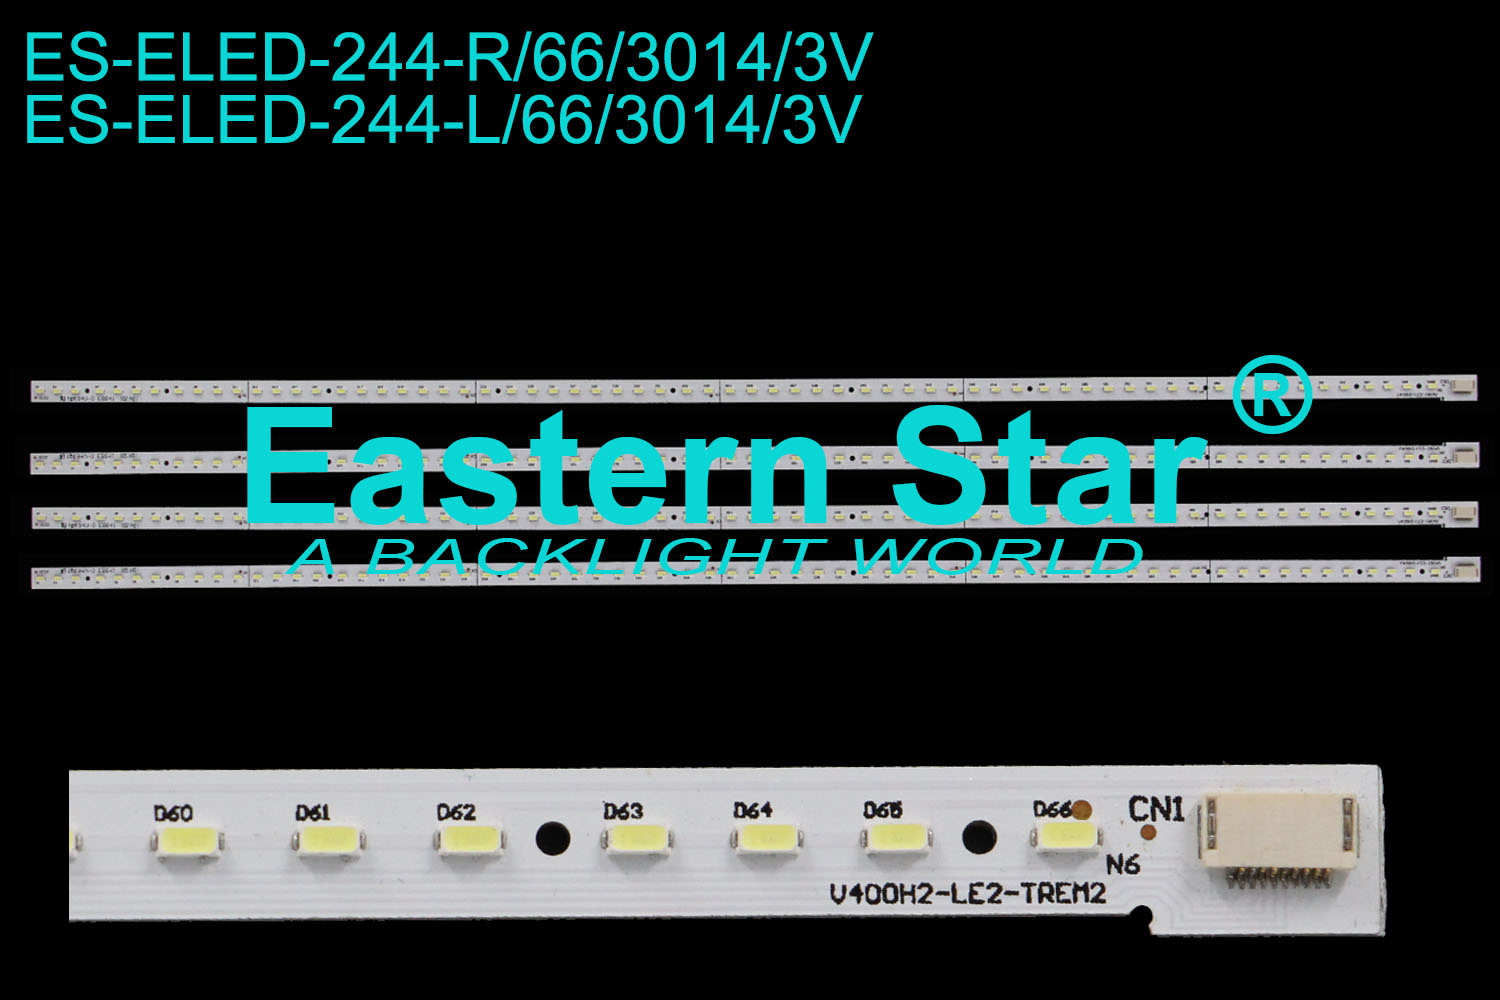 ES-ELED-244 ELED/EDGE TV backlight 40'' 66LEDs use for Tcl/Toshiba V400H2-LE2-TLEM2/TREM2 LED STRIPS(2)